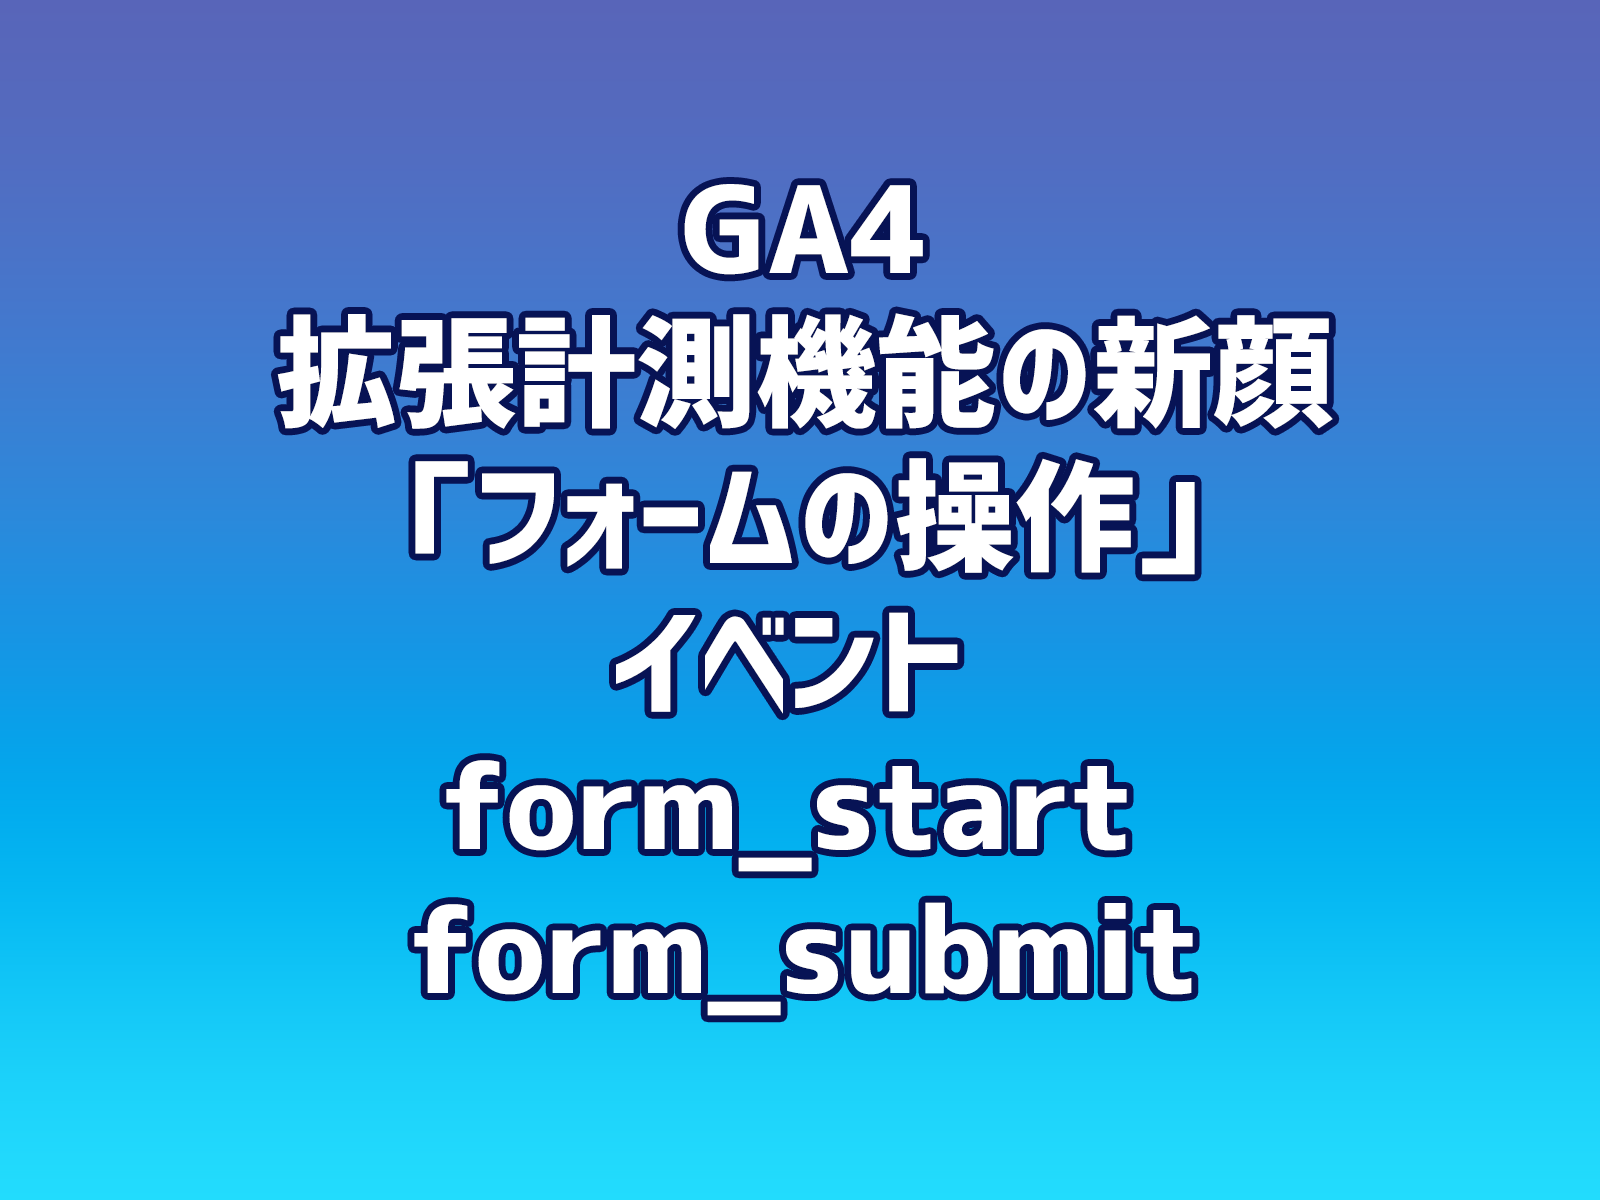 ga4-form-start-form-submit-ga4-quick